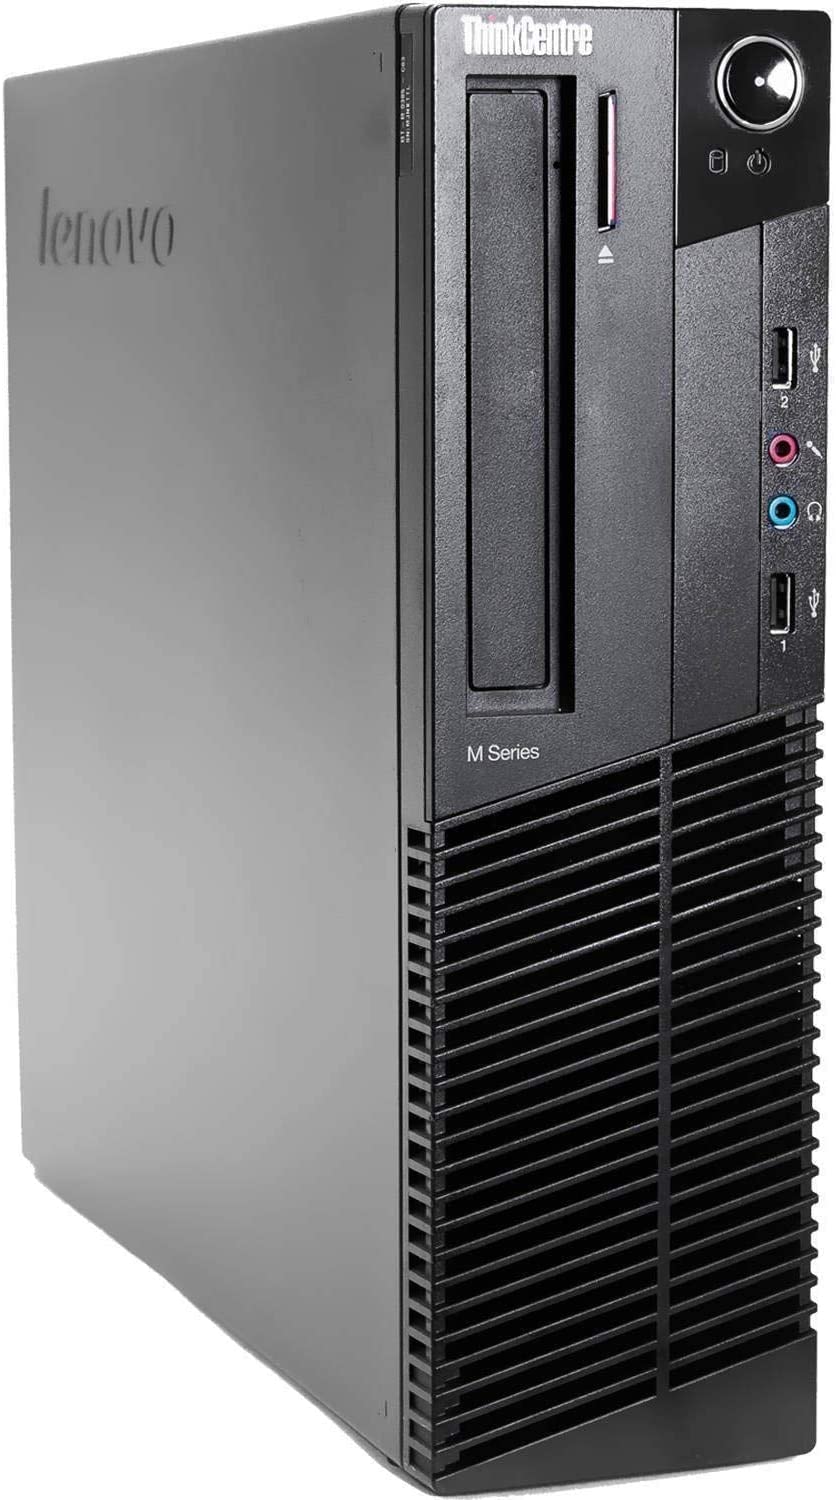 Lenovo ThinkCentre M92 Desktop Computer, Intel Core i5 3.2 GHz, 8 GB RAM, 500 GB SATA HDD, Keyboard & Mouse, DVD-ROM, Windows 10 Professional (Renewed)